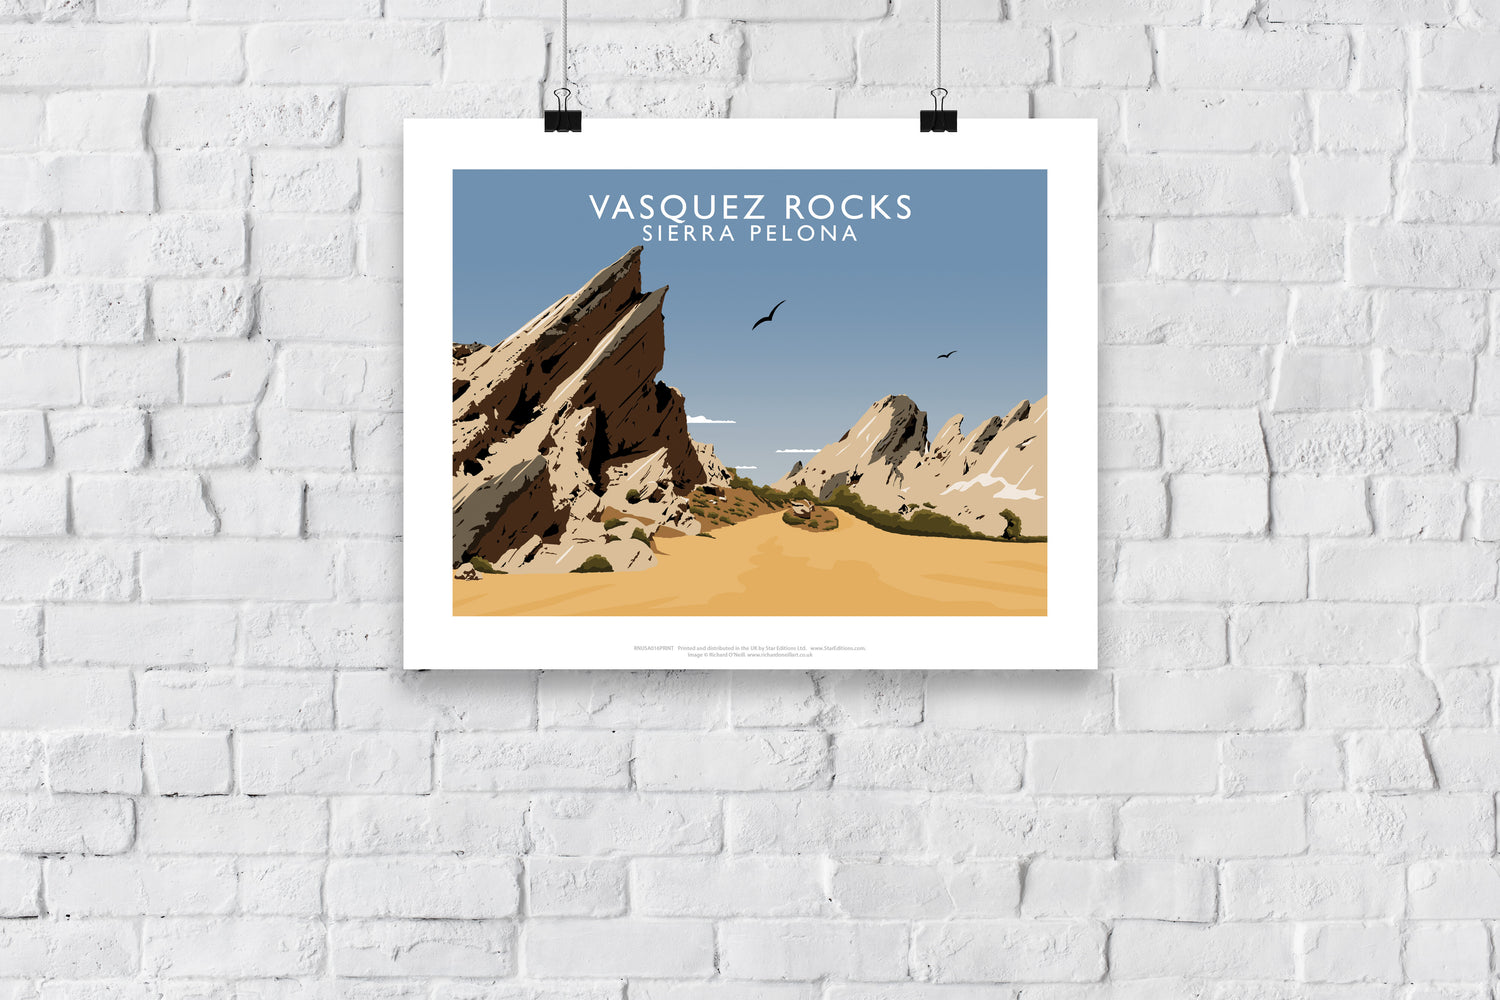 Vasquez Rocks, Sierra Pelona, Calafornia, USA - Art Print